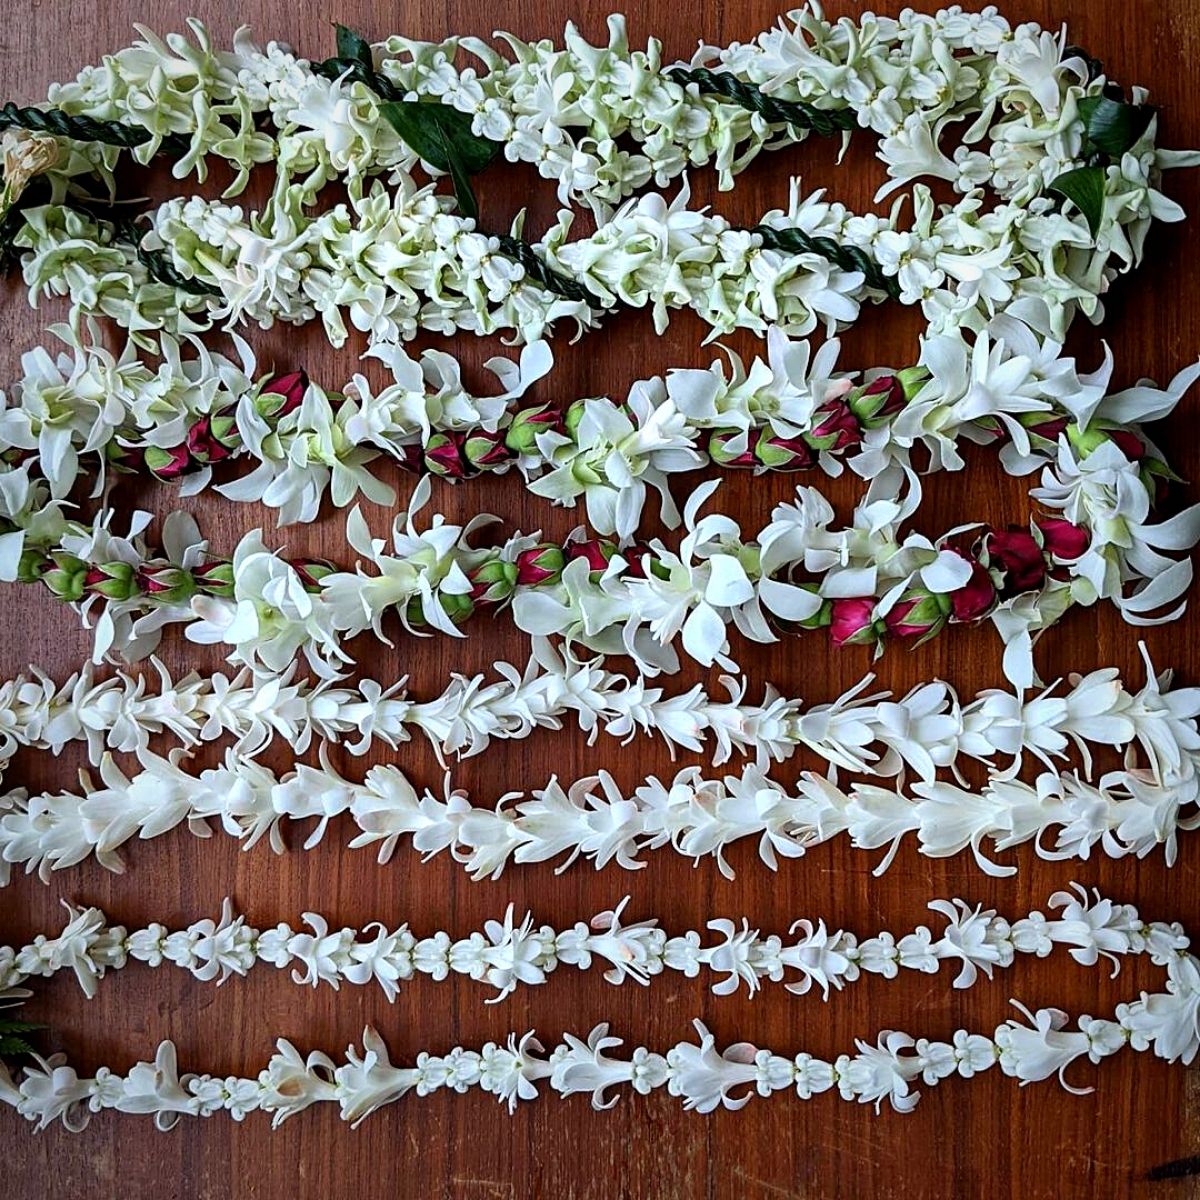 Tuberose flowers used in making Lei Day leis